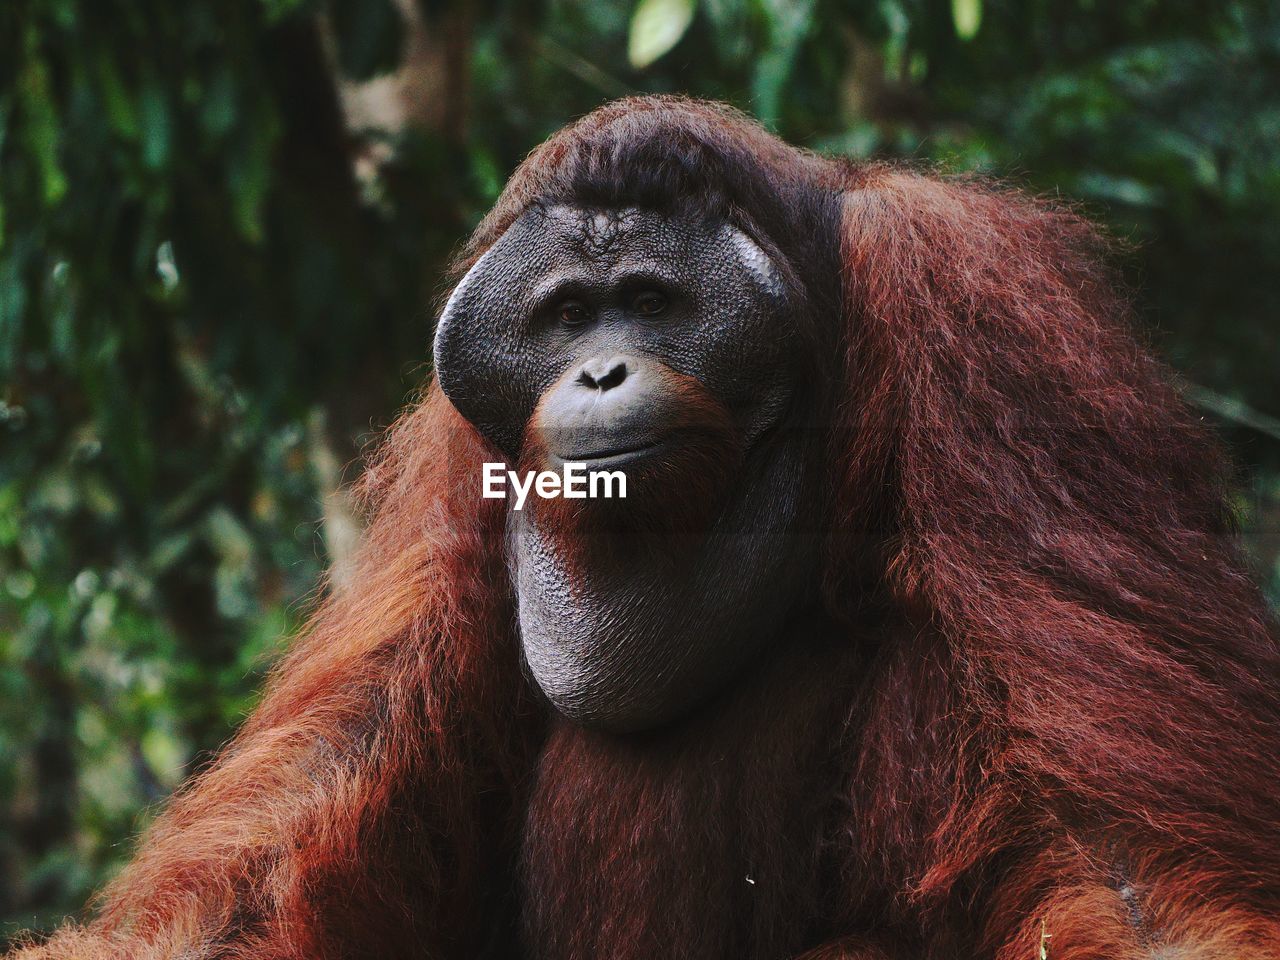 Close-up portrait of an orang utan